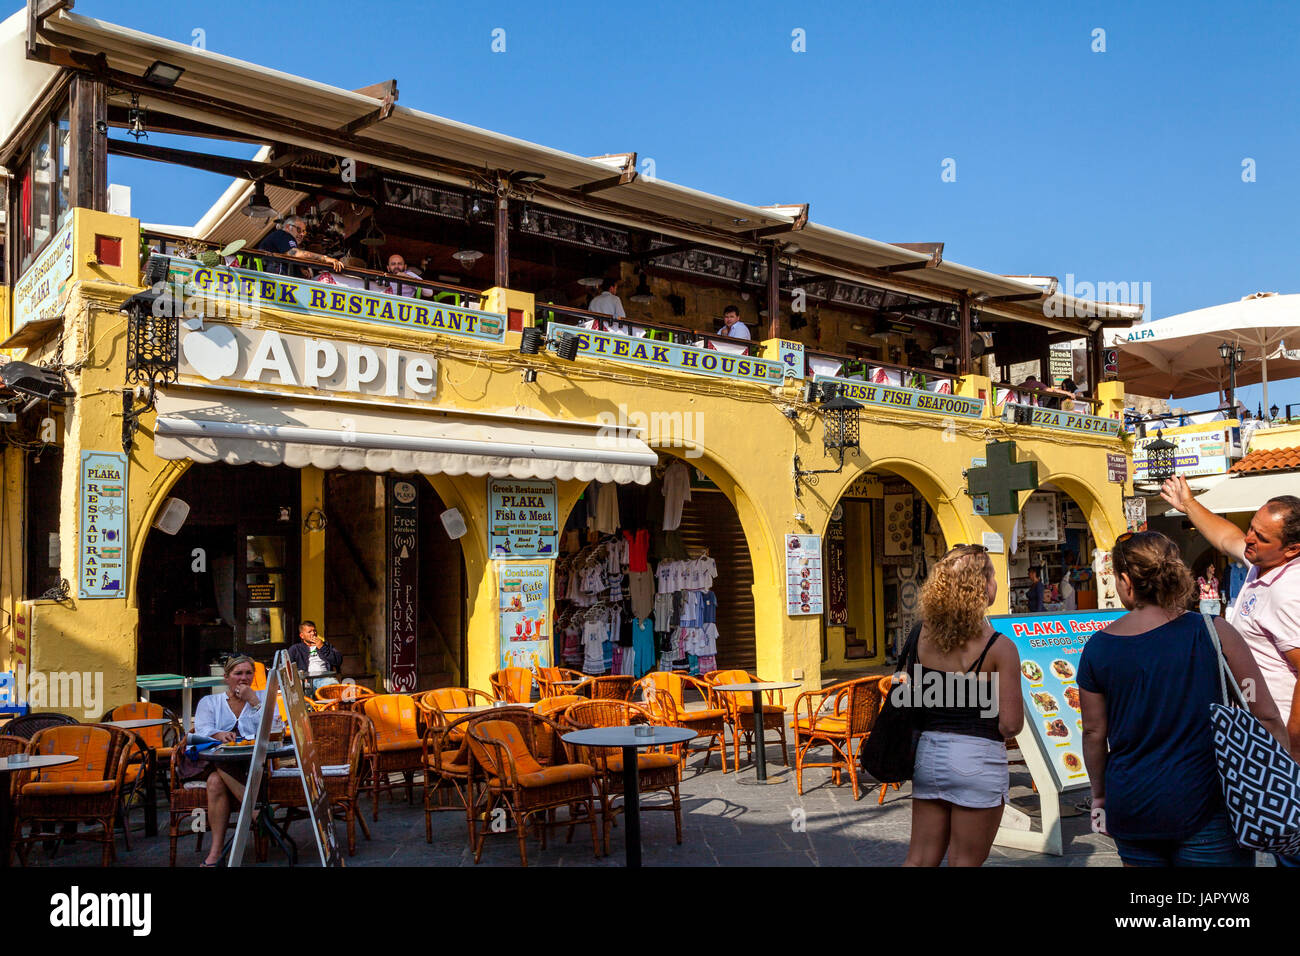 Bunte Restaurants In Ippokratous Square, Altstadt von Rhodos, Rhodos, Griechenland Stockfoto